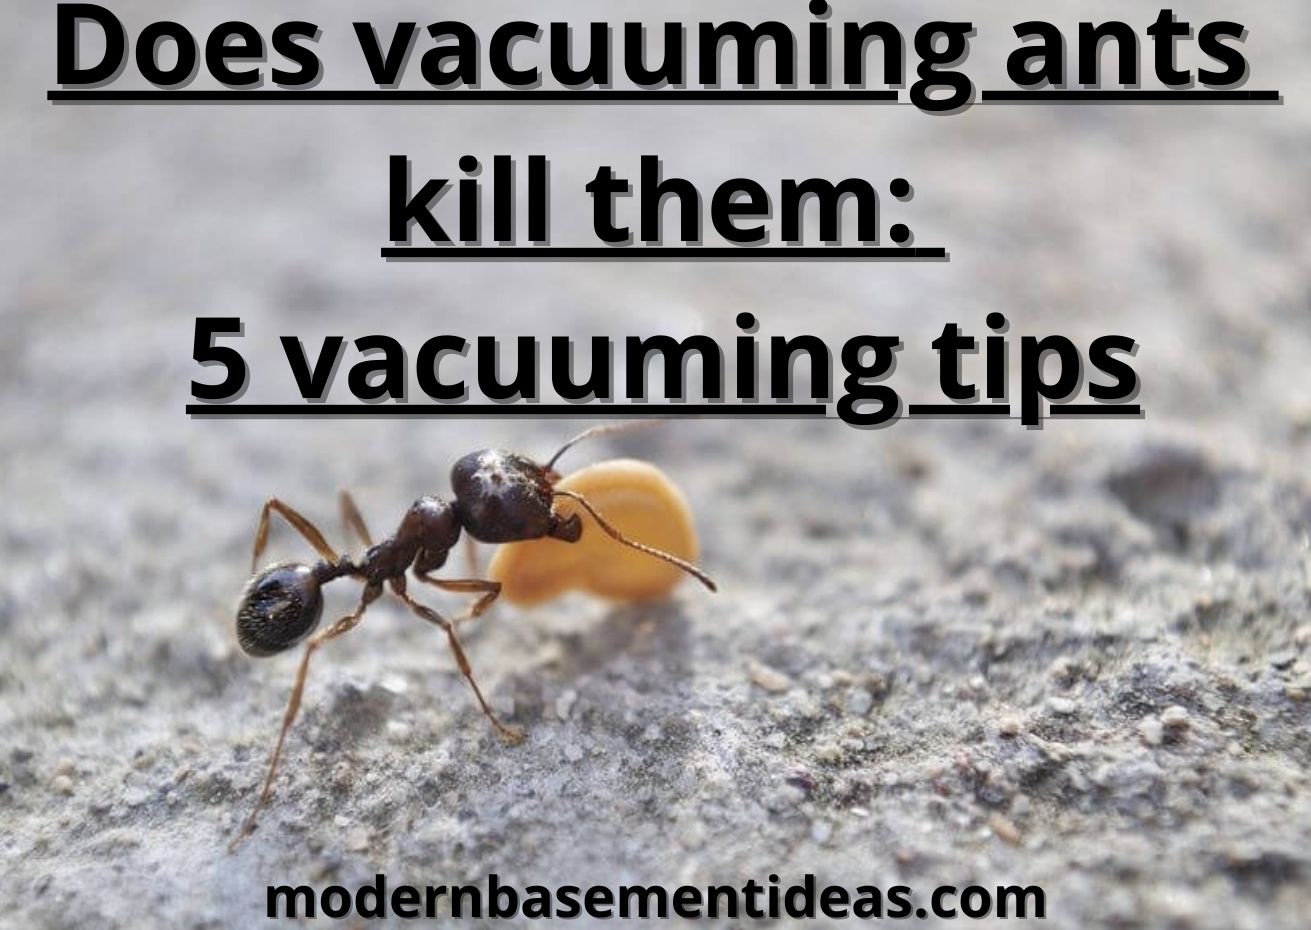 Does vacuuming ants kill them: 5 helpful tips